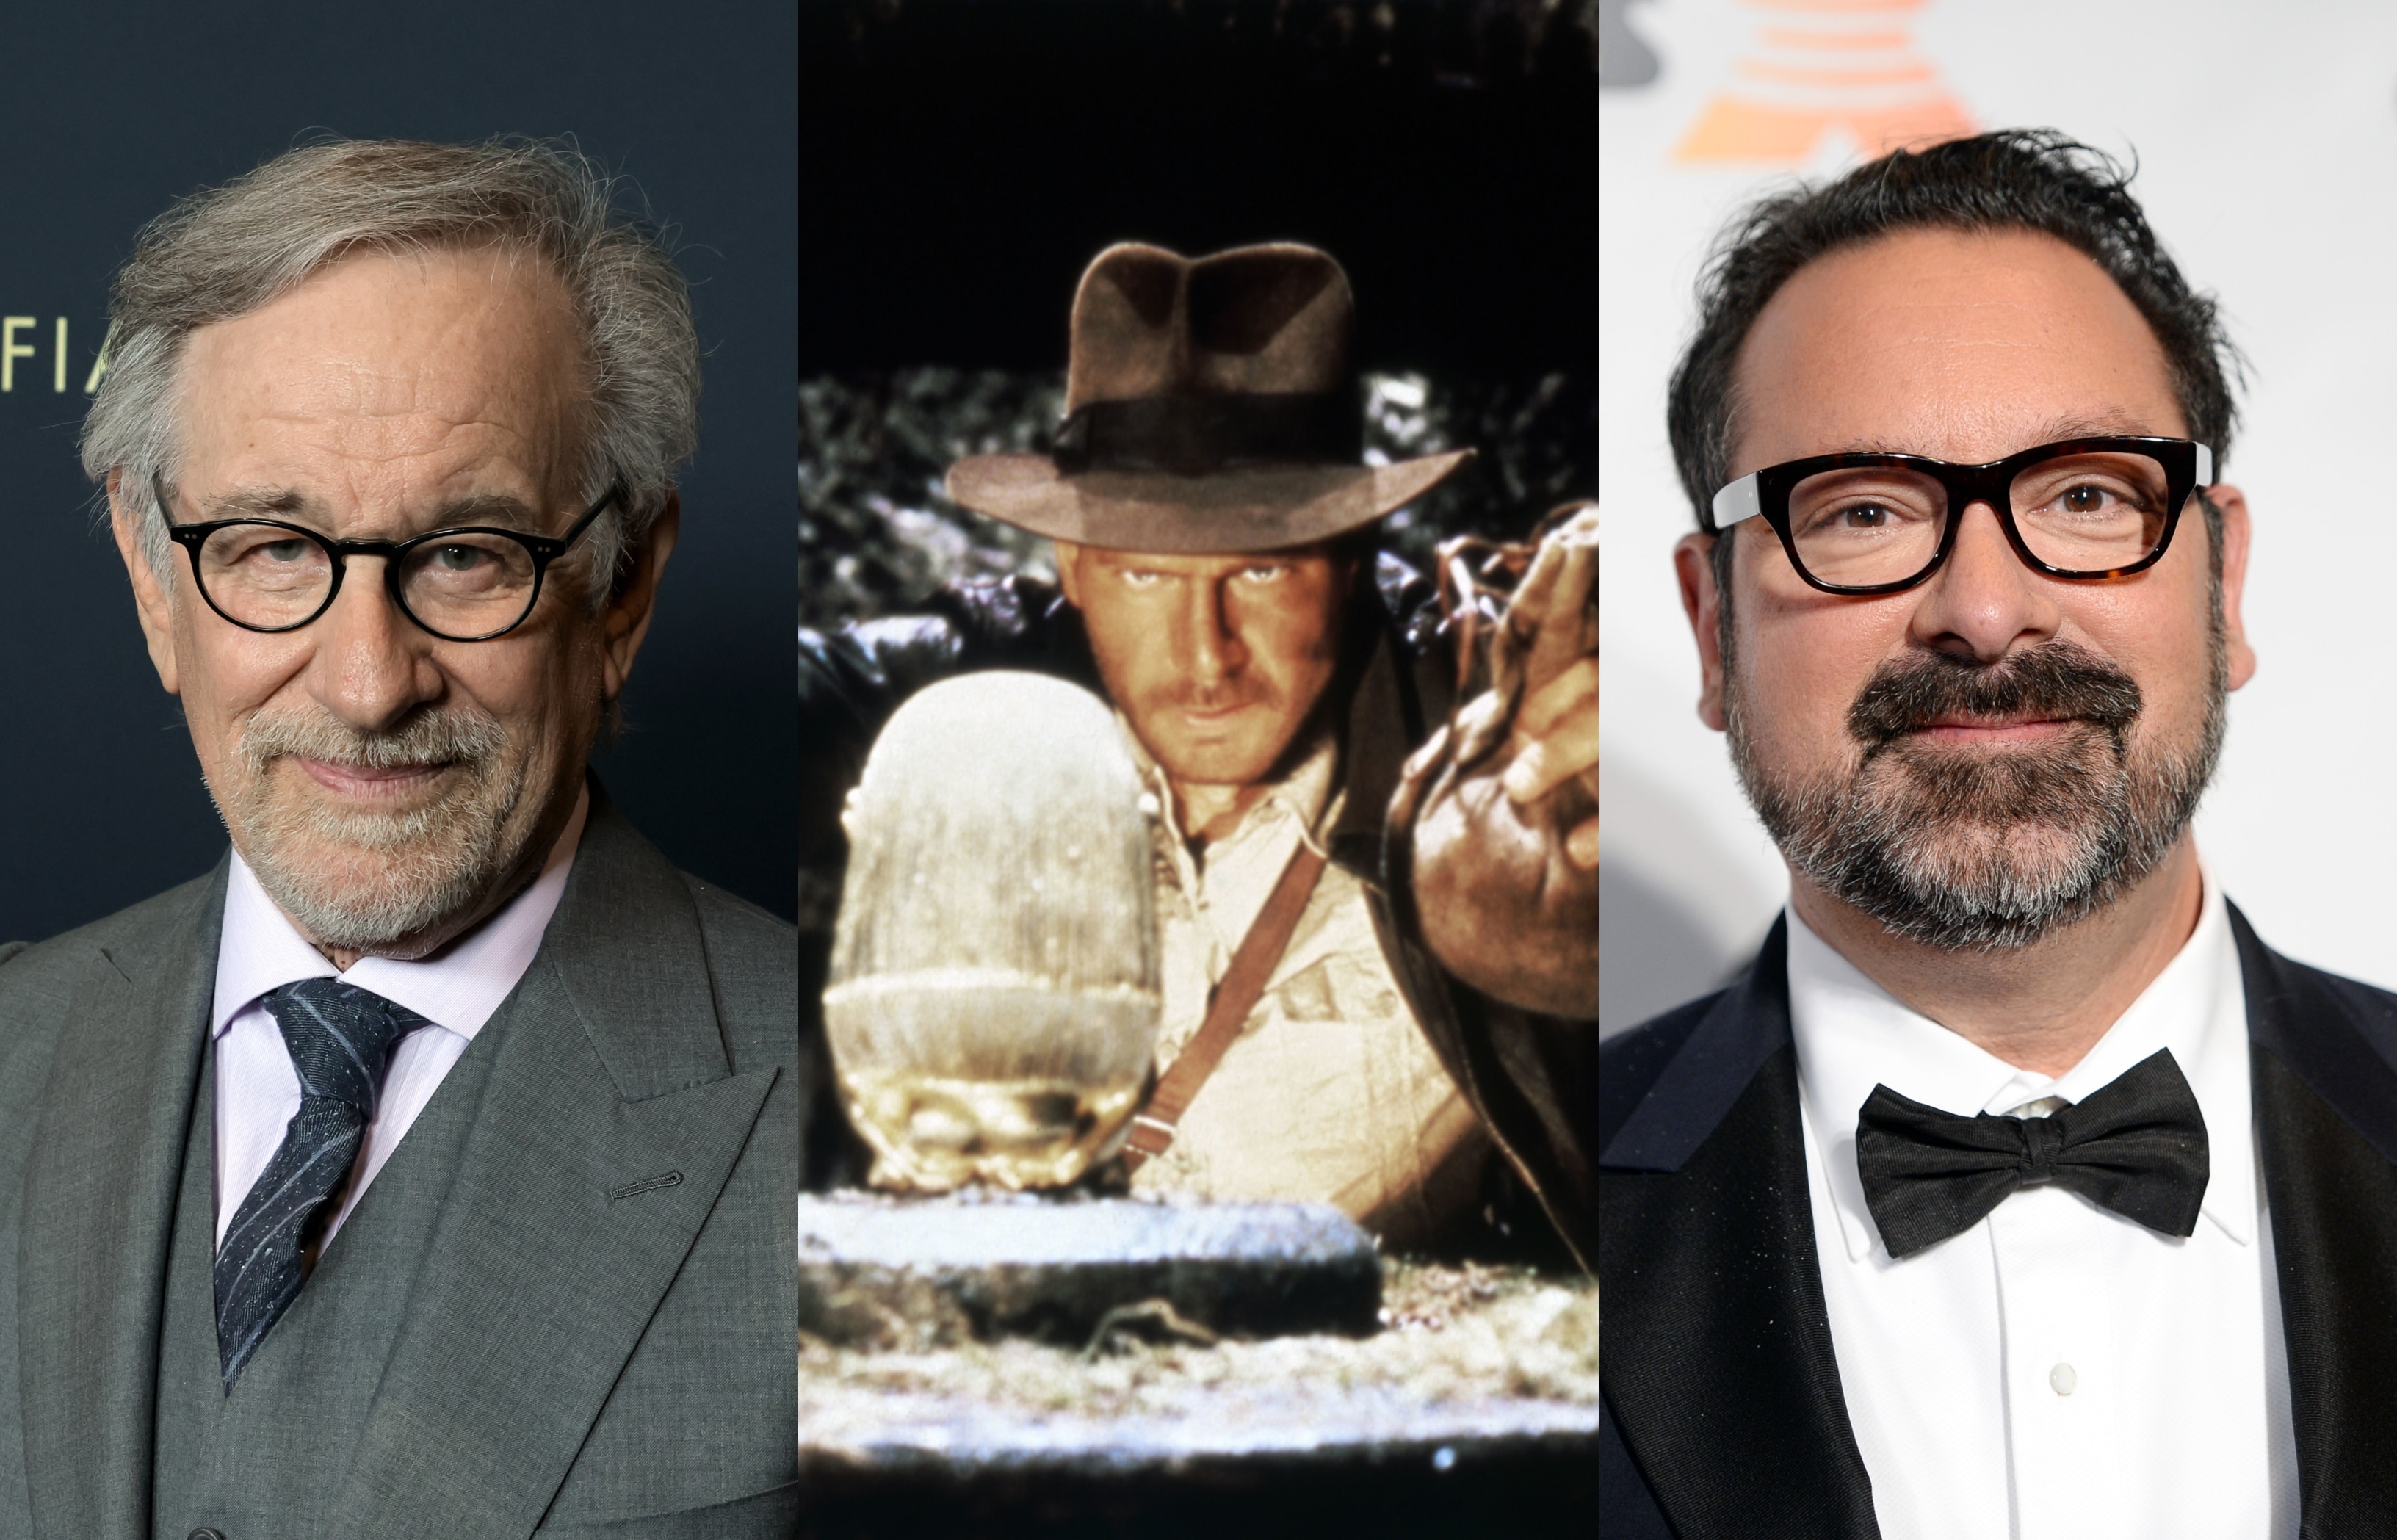 Indiana Jones 5: Steven Spielberg advice to James Mangold